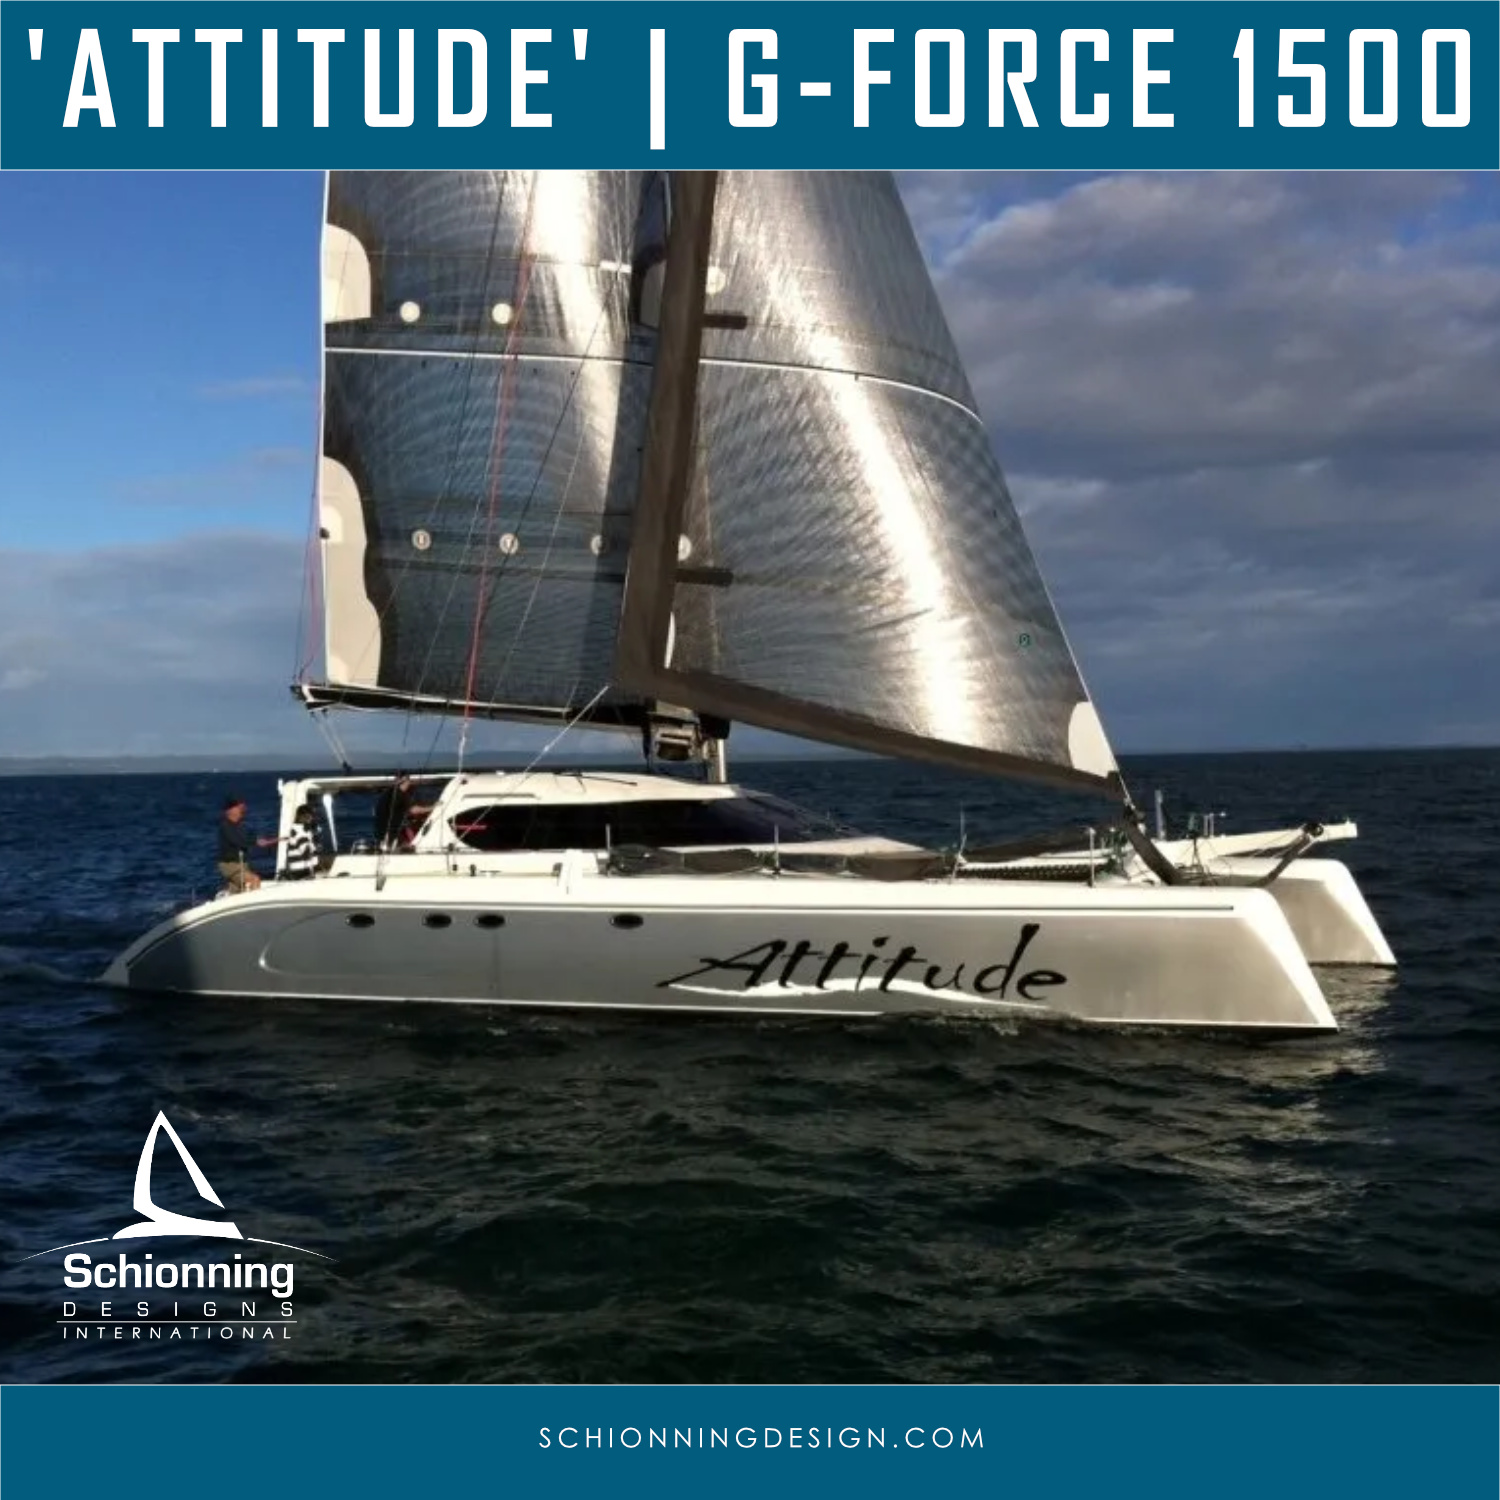 ATTITUDE-G-Force-1500-Catamaran-Owner-Report-Schionning-Designs